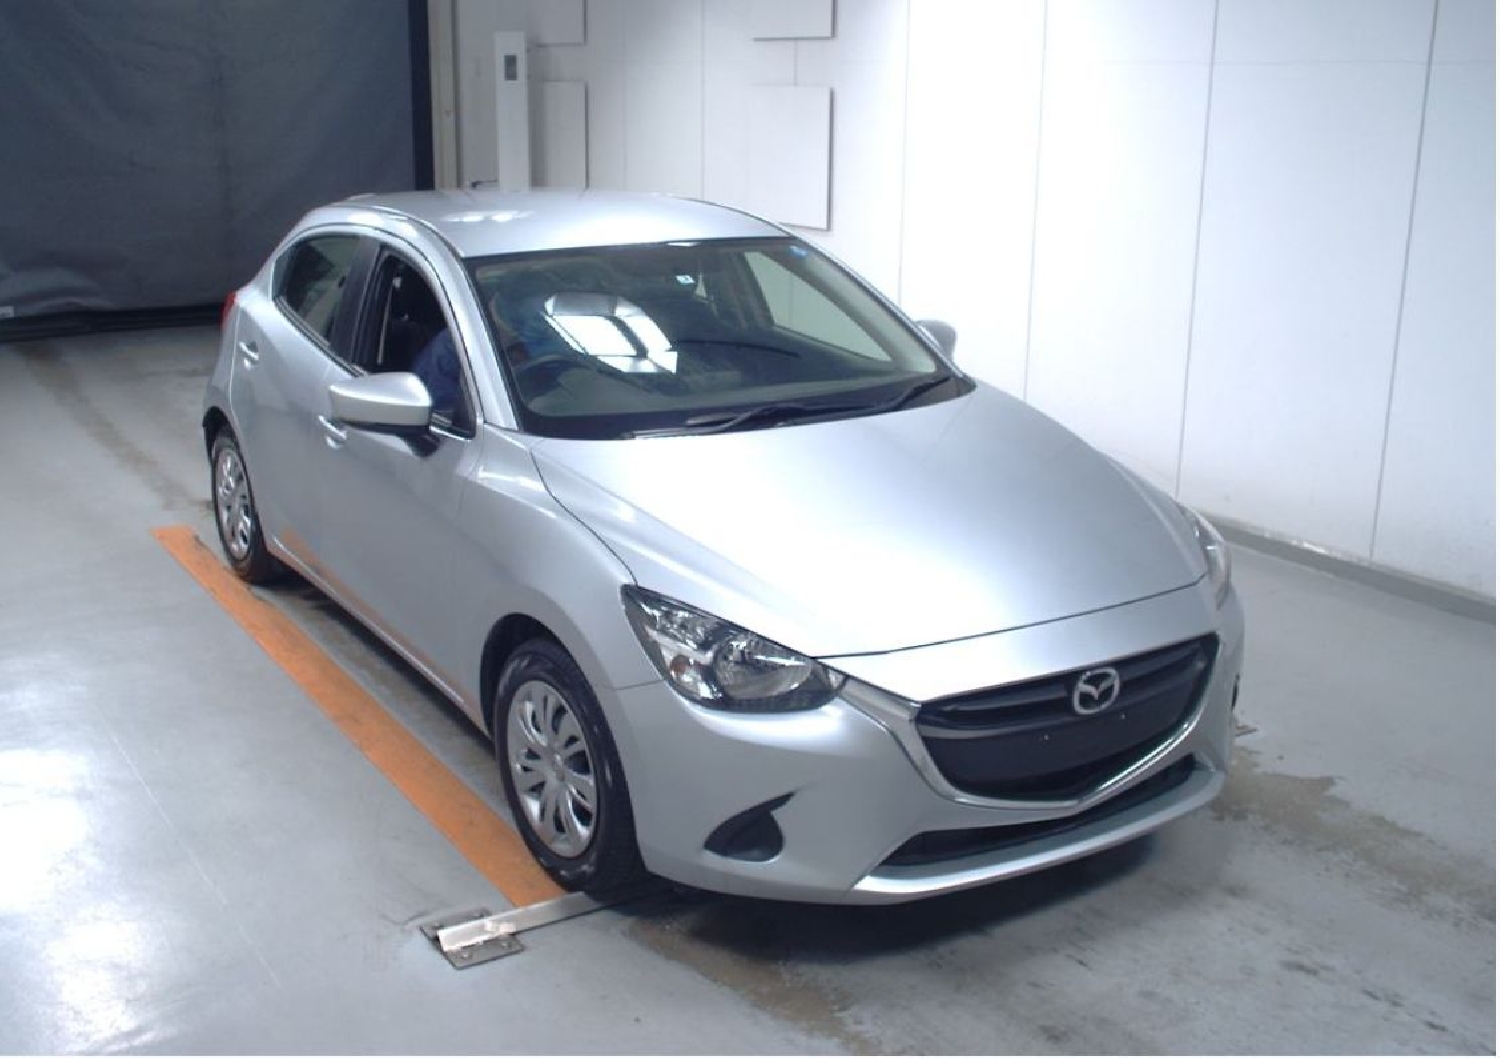 Used Mazda Demio 2017 Mar Silver For Sale | Vehicle No CY-68267